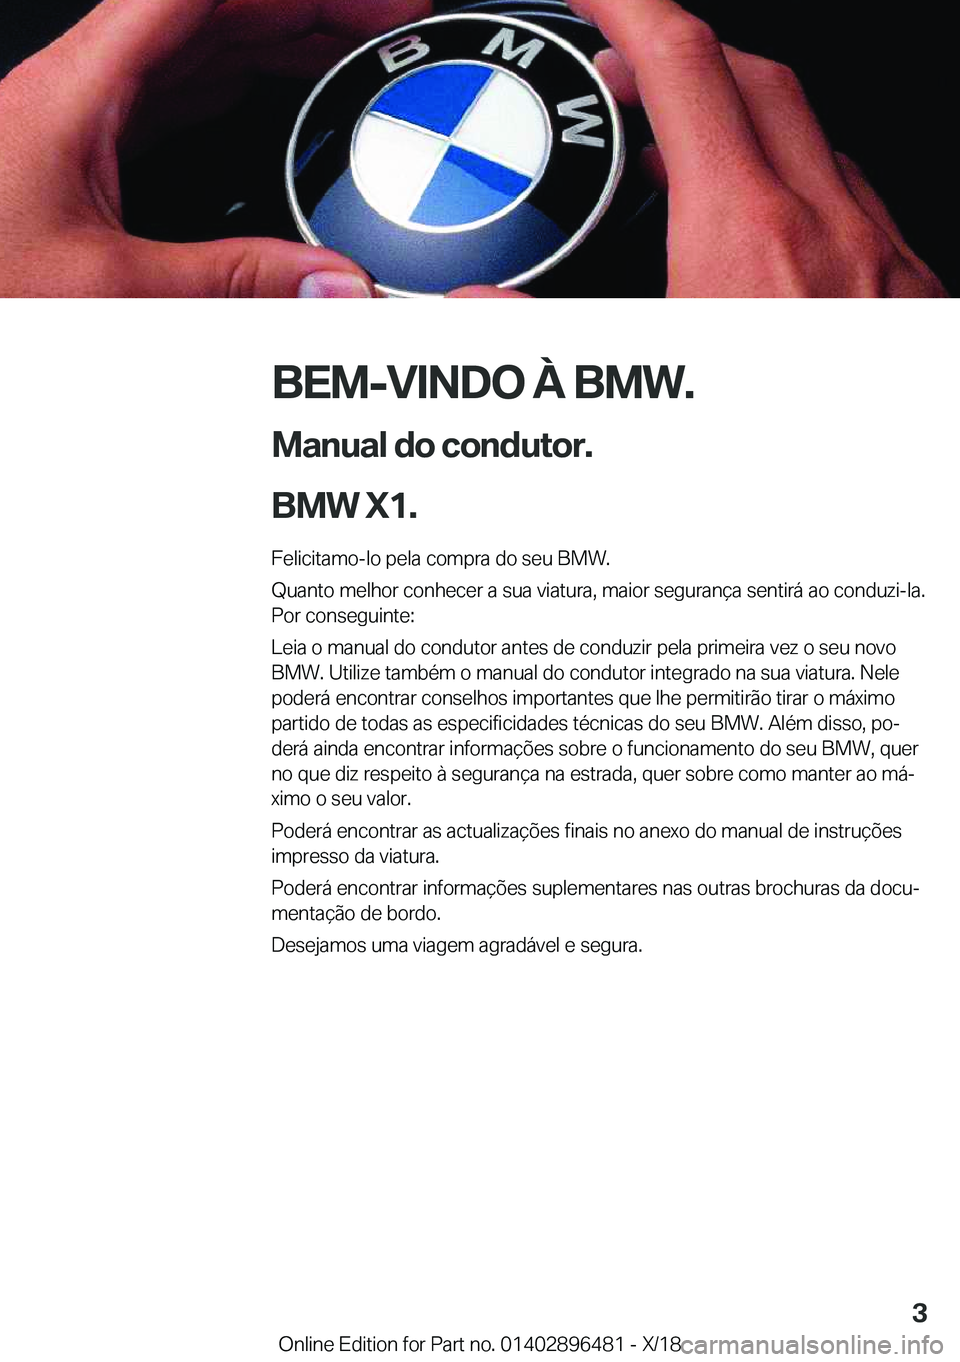 BMW X1 2019  Manual do condutor (in Portuguese) �B�E�M�-�V�I�N�D�O��À��B�M�W�.
�M�a�n�u�a�l��d�o��c�o�n�d�u�t�o�r�.
�B�M�W��X�1�. �F�e�l�i�c�i�t�a�m�o�-�l�o��p�e�l�a��c�o�m�p�r�a��d�o��s�e�u��B�M�W�.
�Q�u�a�n�t�o��m�e�l�h�o�r��c�o�n�h�